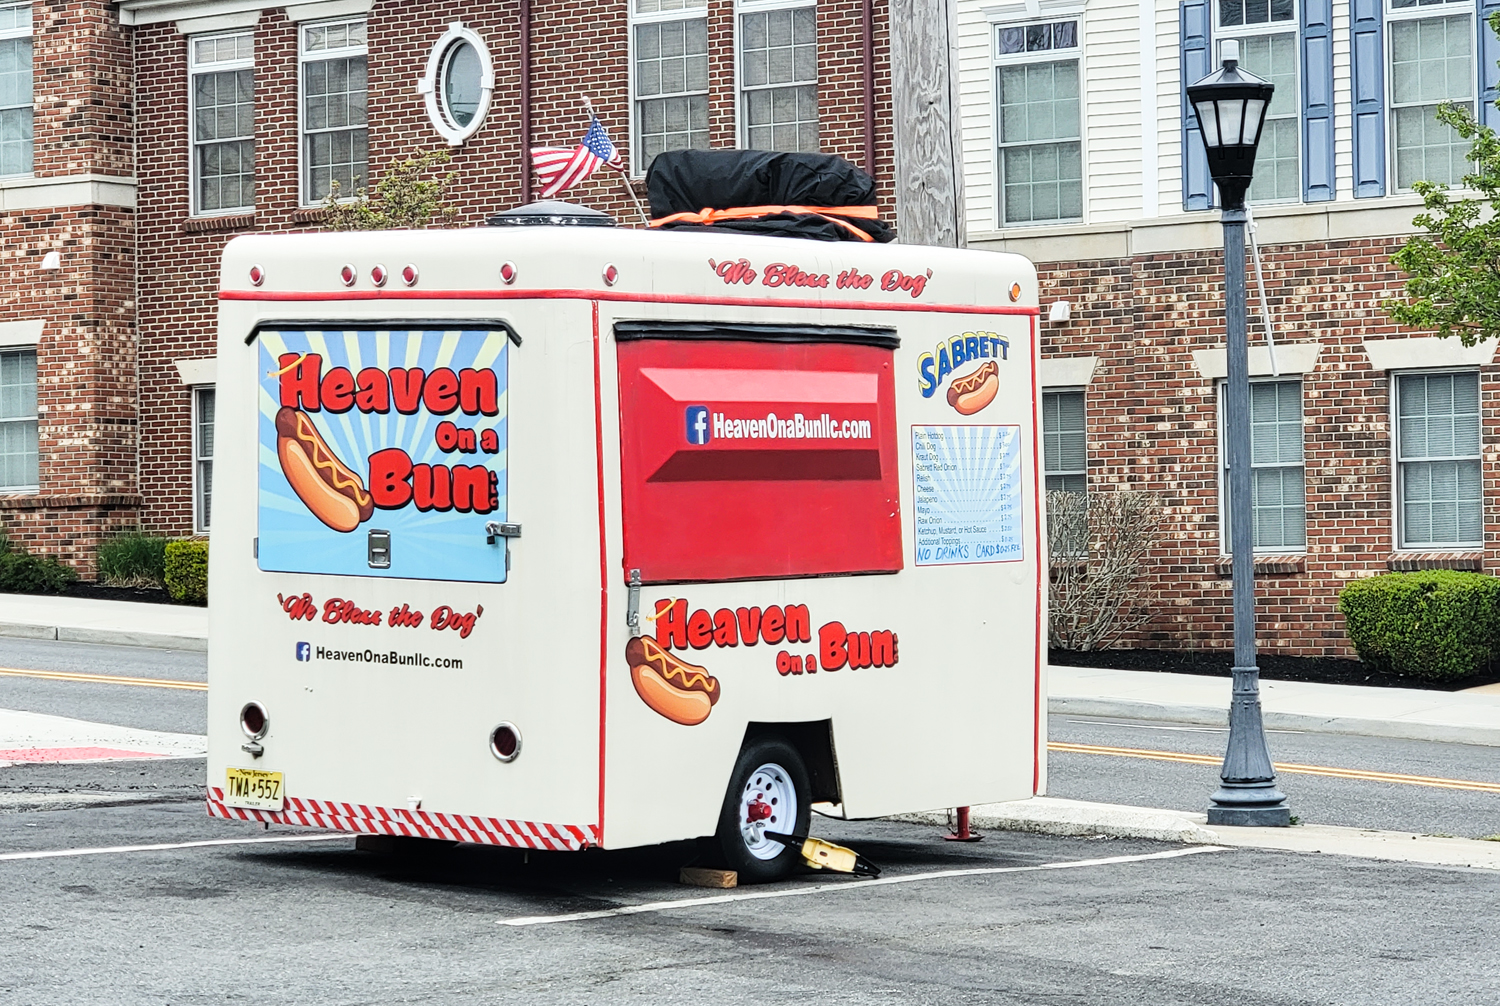 Sabrett Hot Dog Cart in New Jersey 